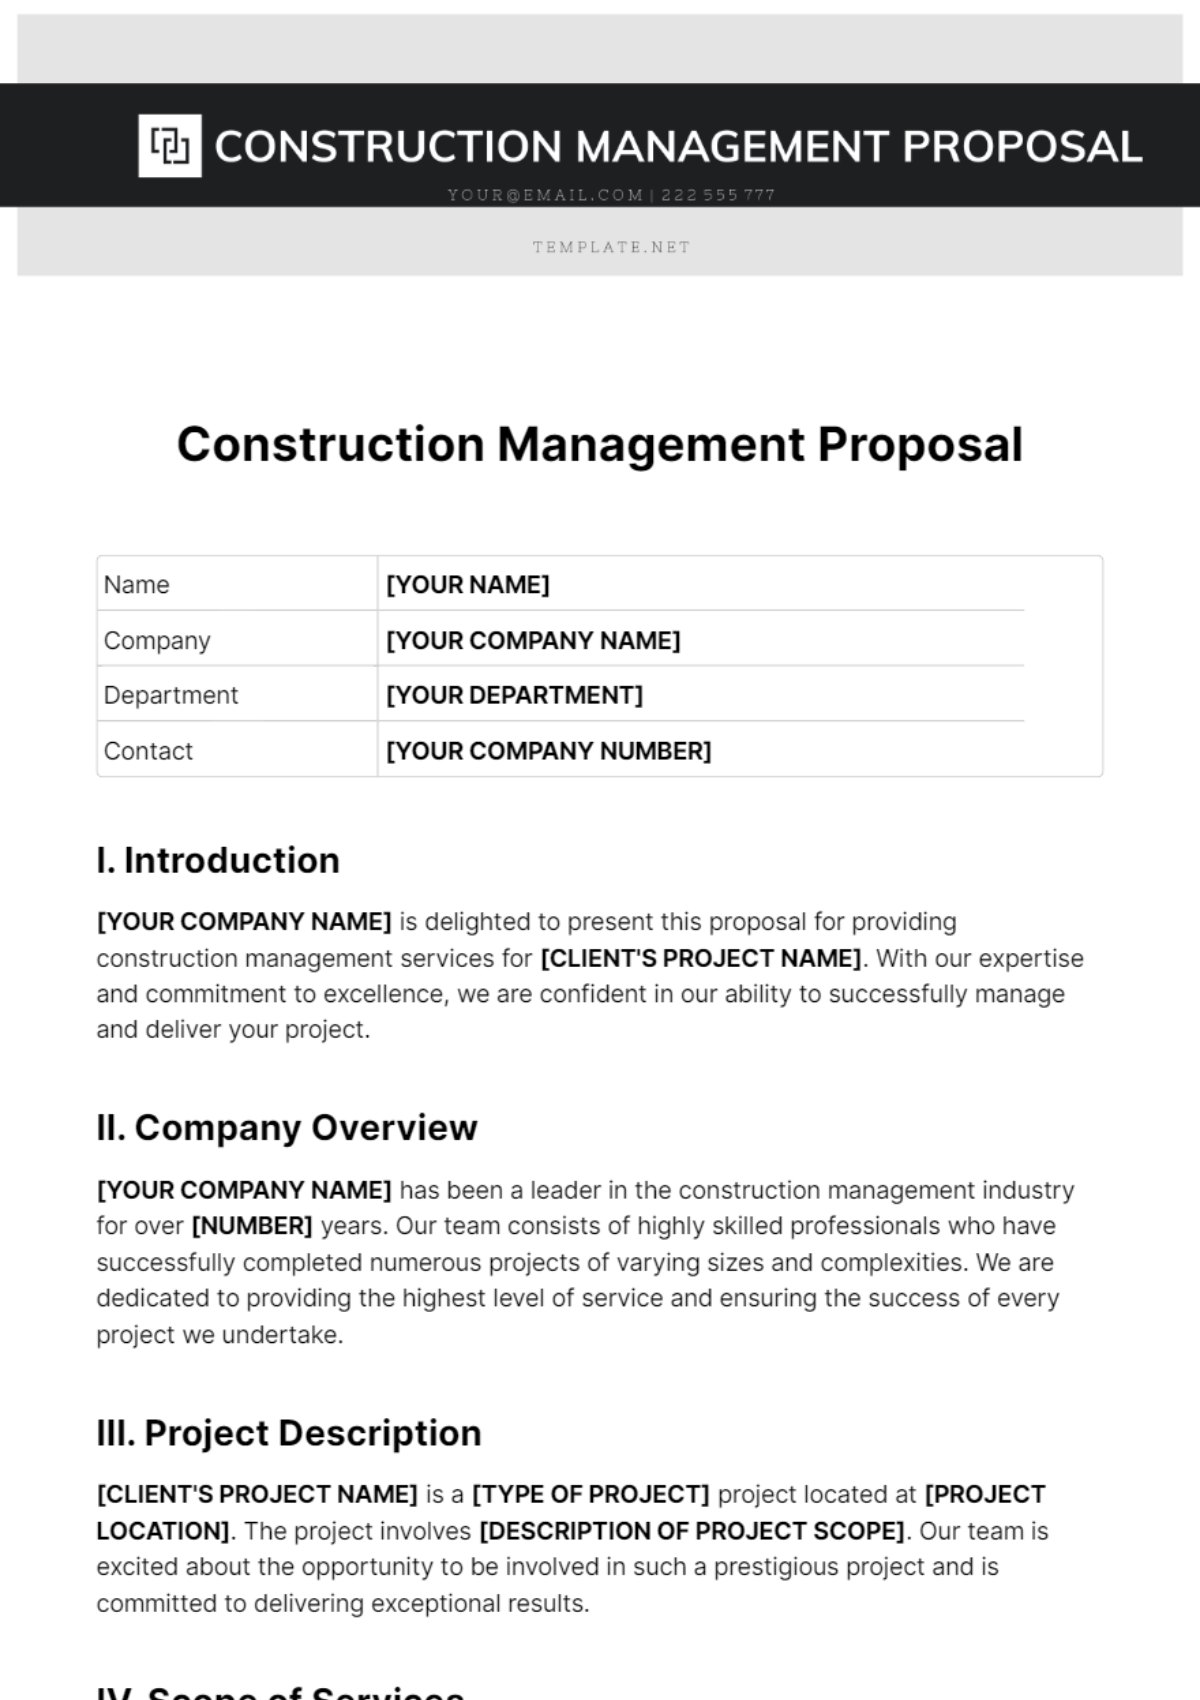 Construction Management Proposal Template